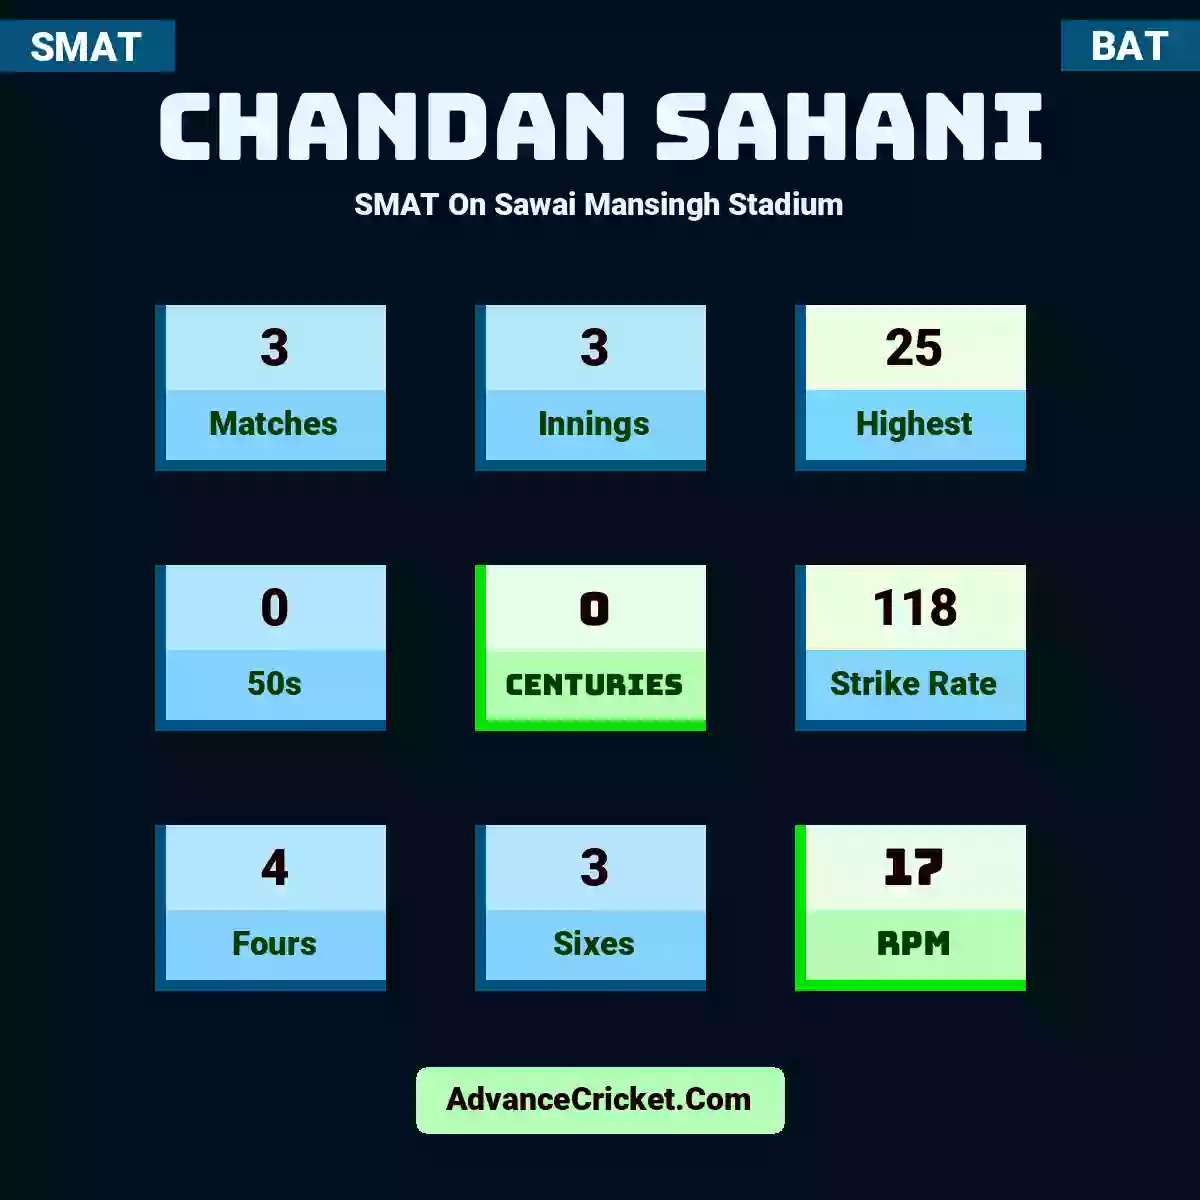 Chandan Sahani SMAT  On Sawai Mansingh Stadium, Chandan Sahani played 3 matches, scored 25 runs as highest, 0 half-centuries, and 0 centuries, with a strike rate of 118. C.Sahani hit 4 fours and 3 sixes, with an RPM of 17.